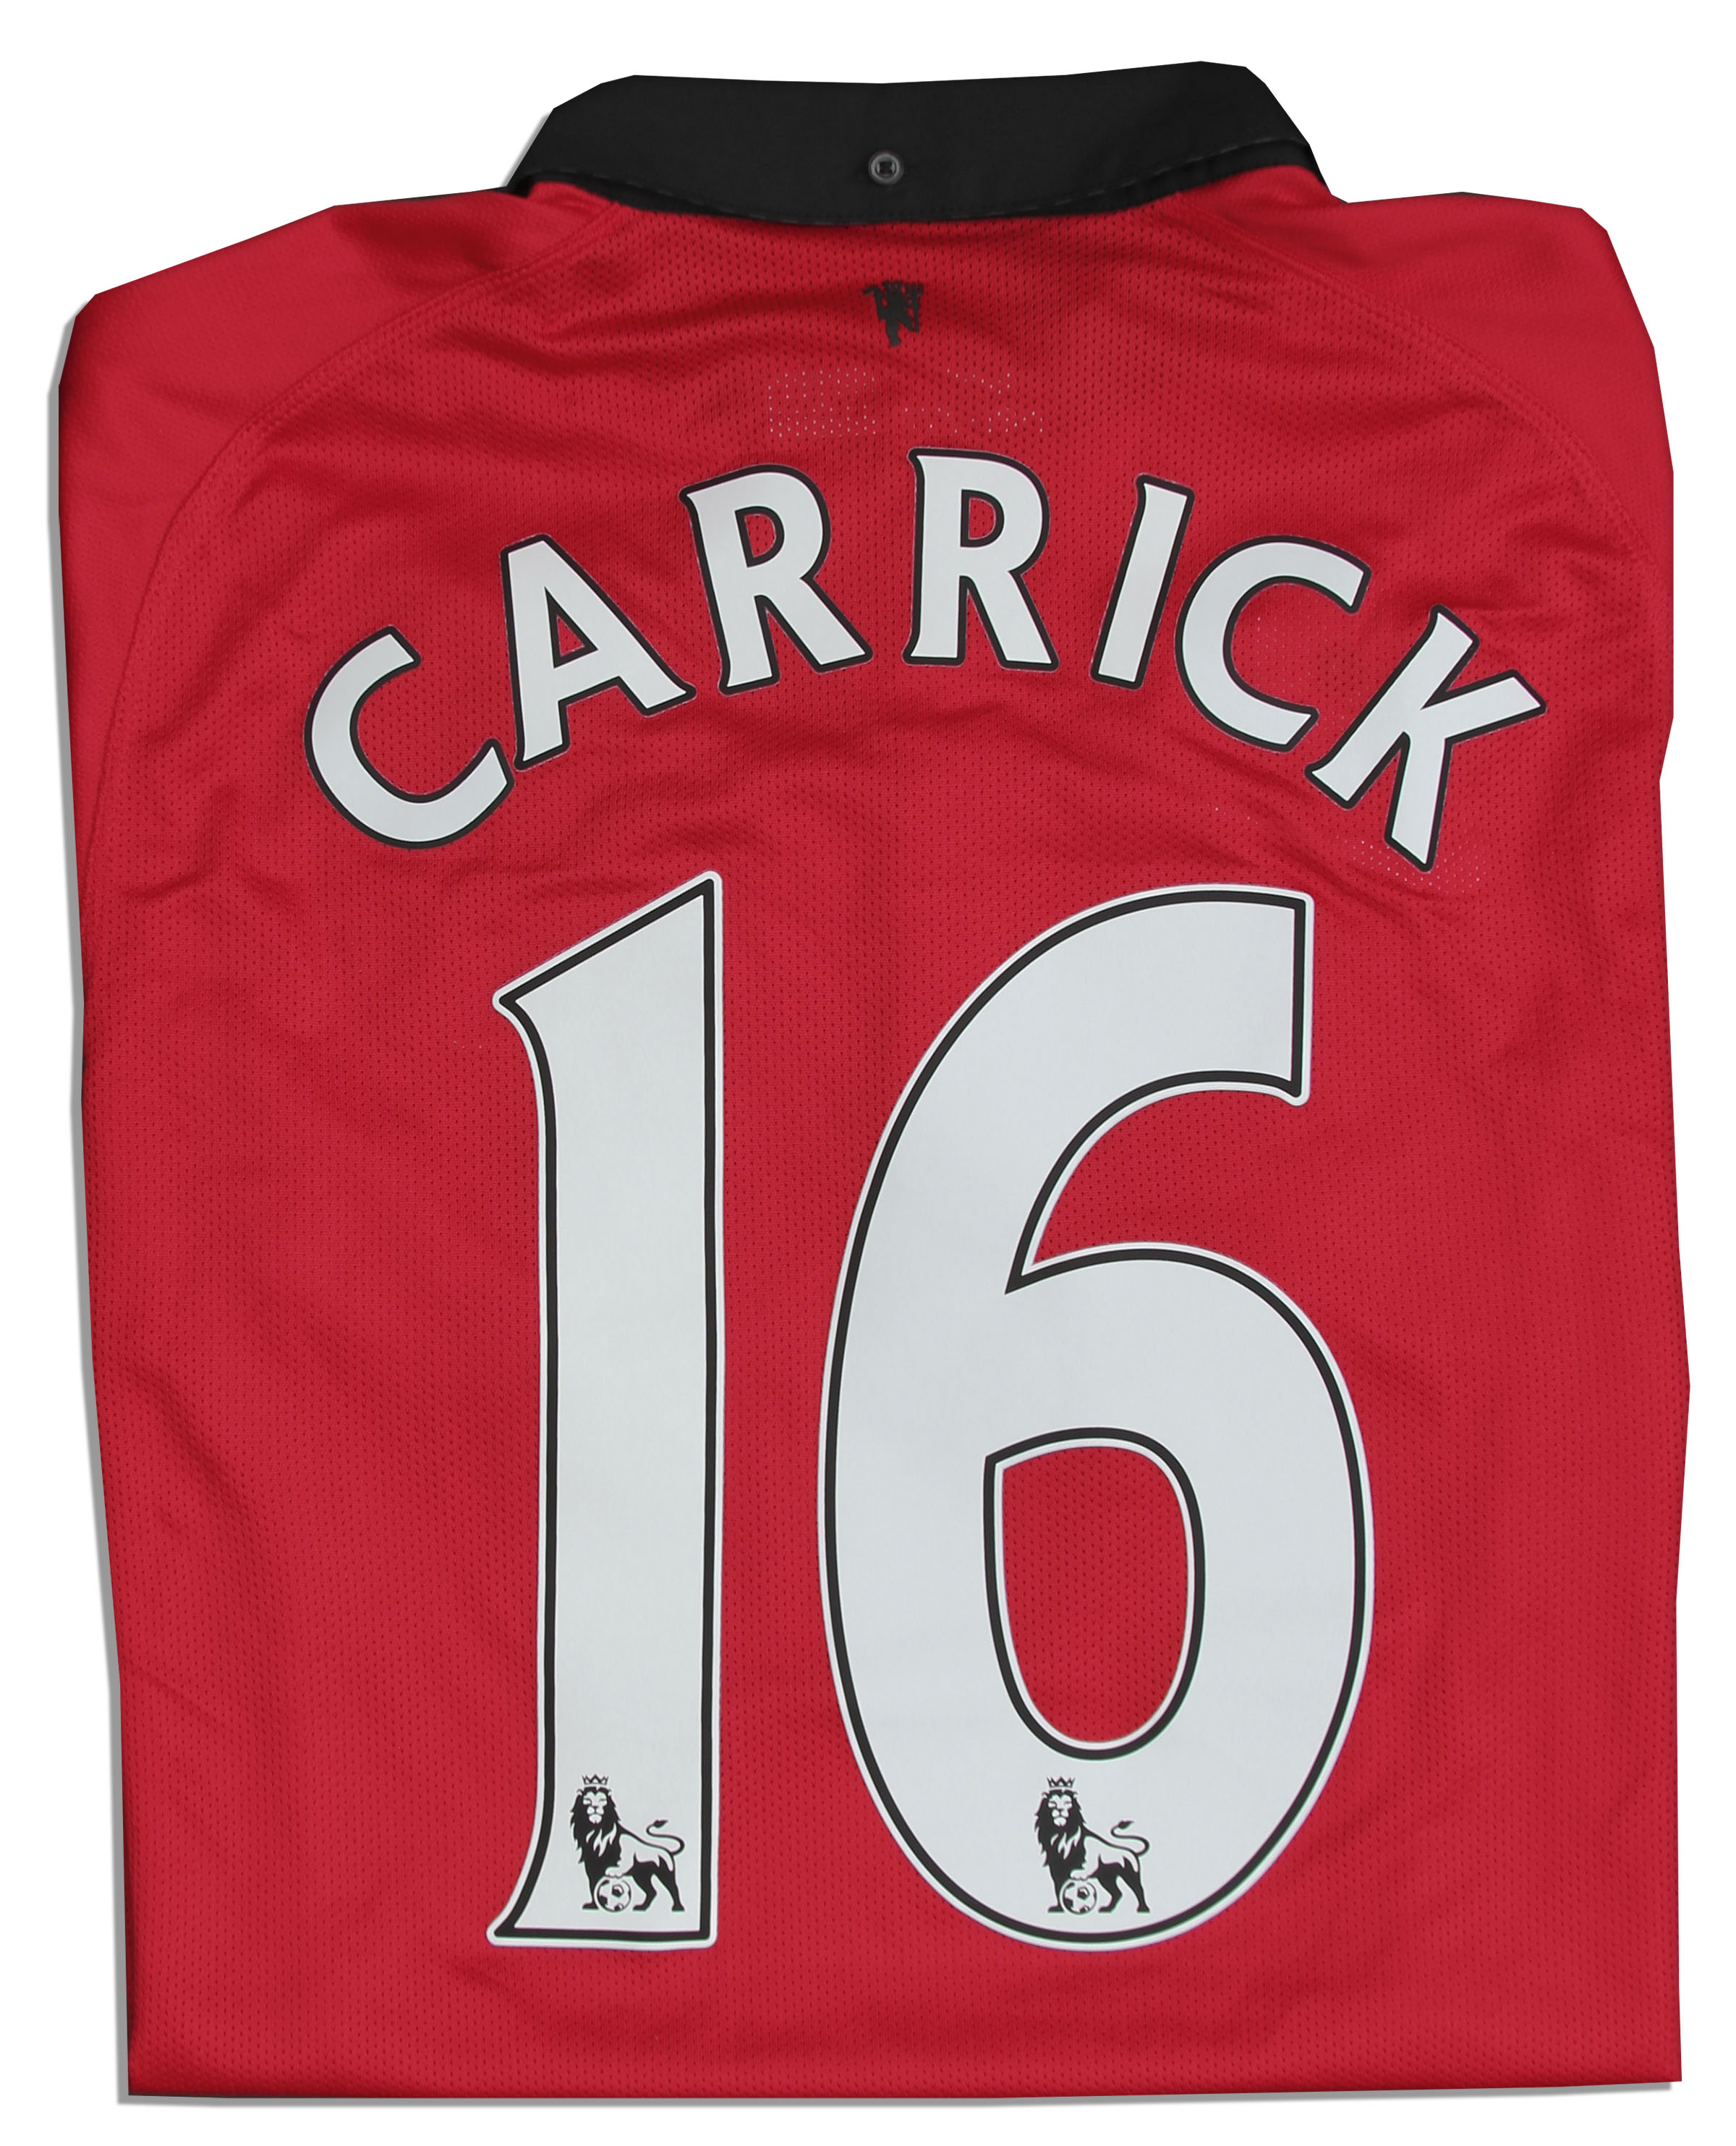 carrick jersey number